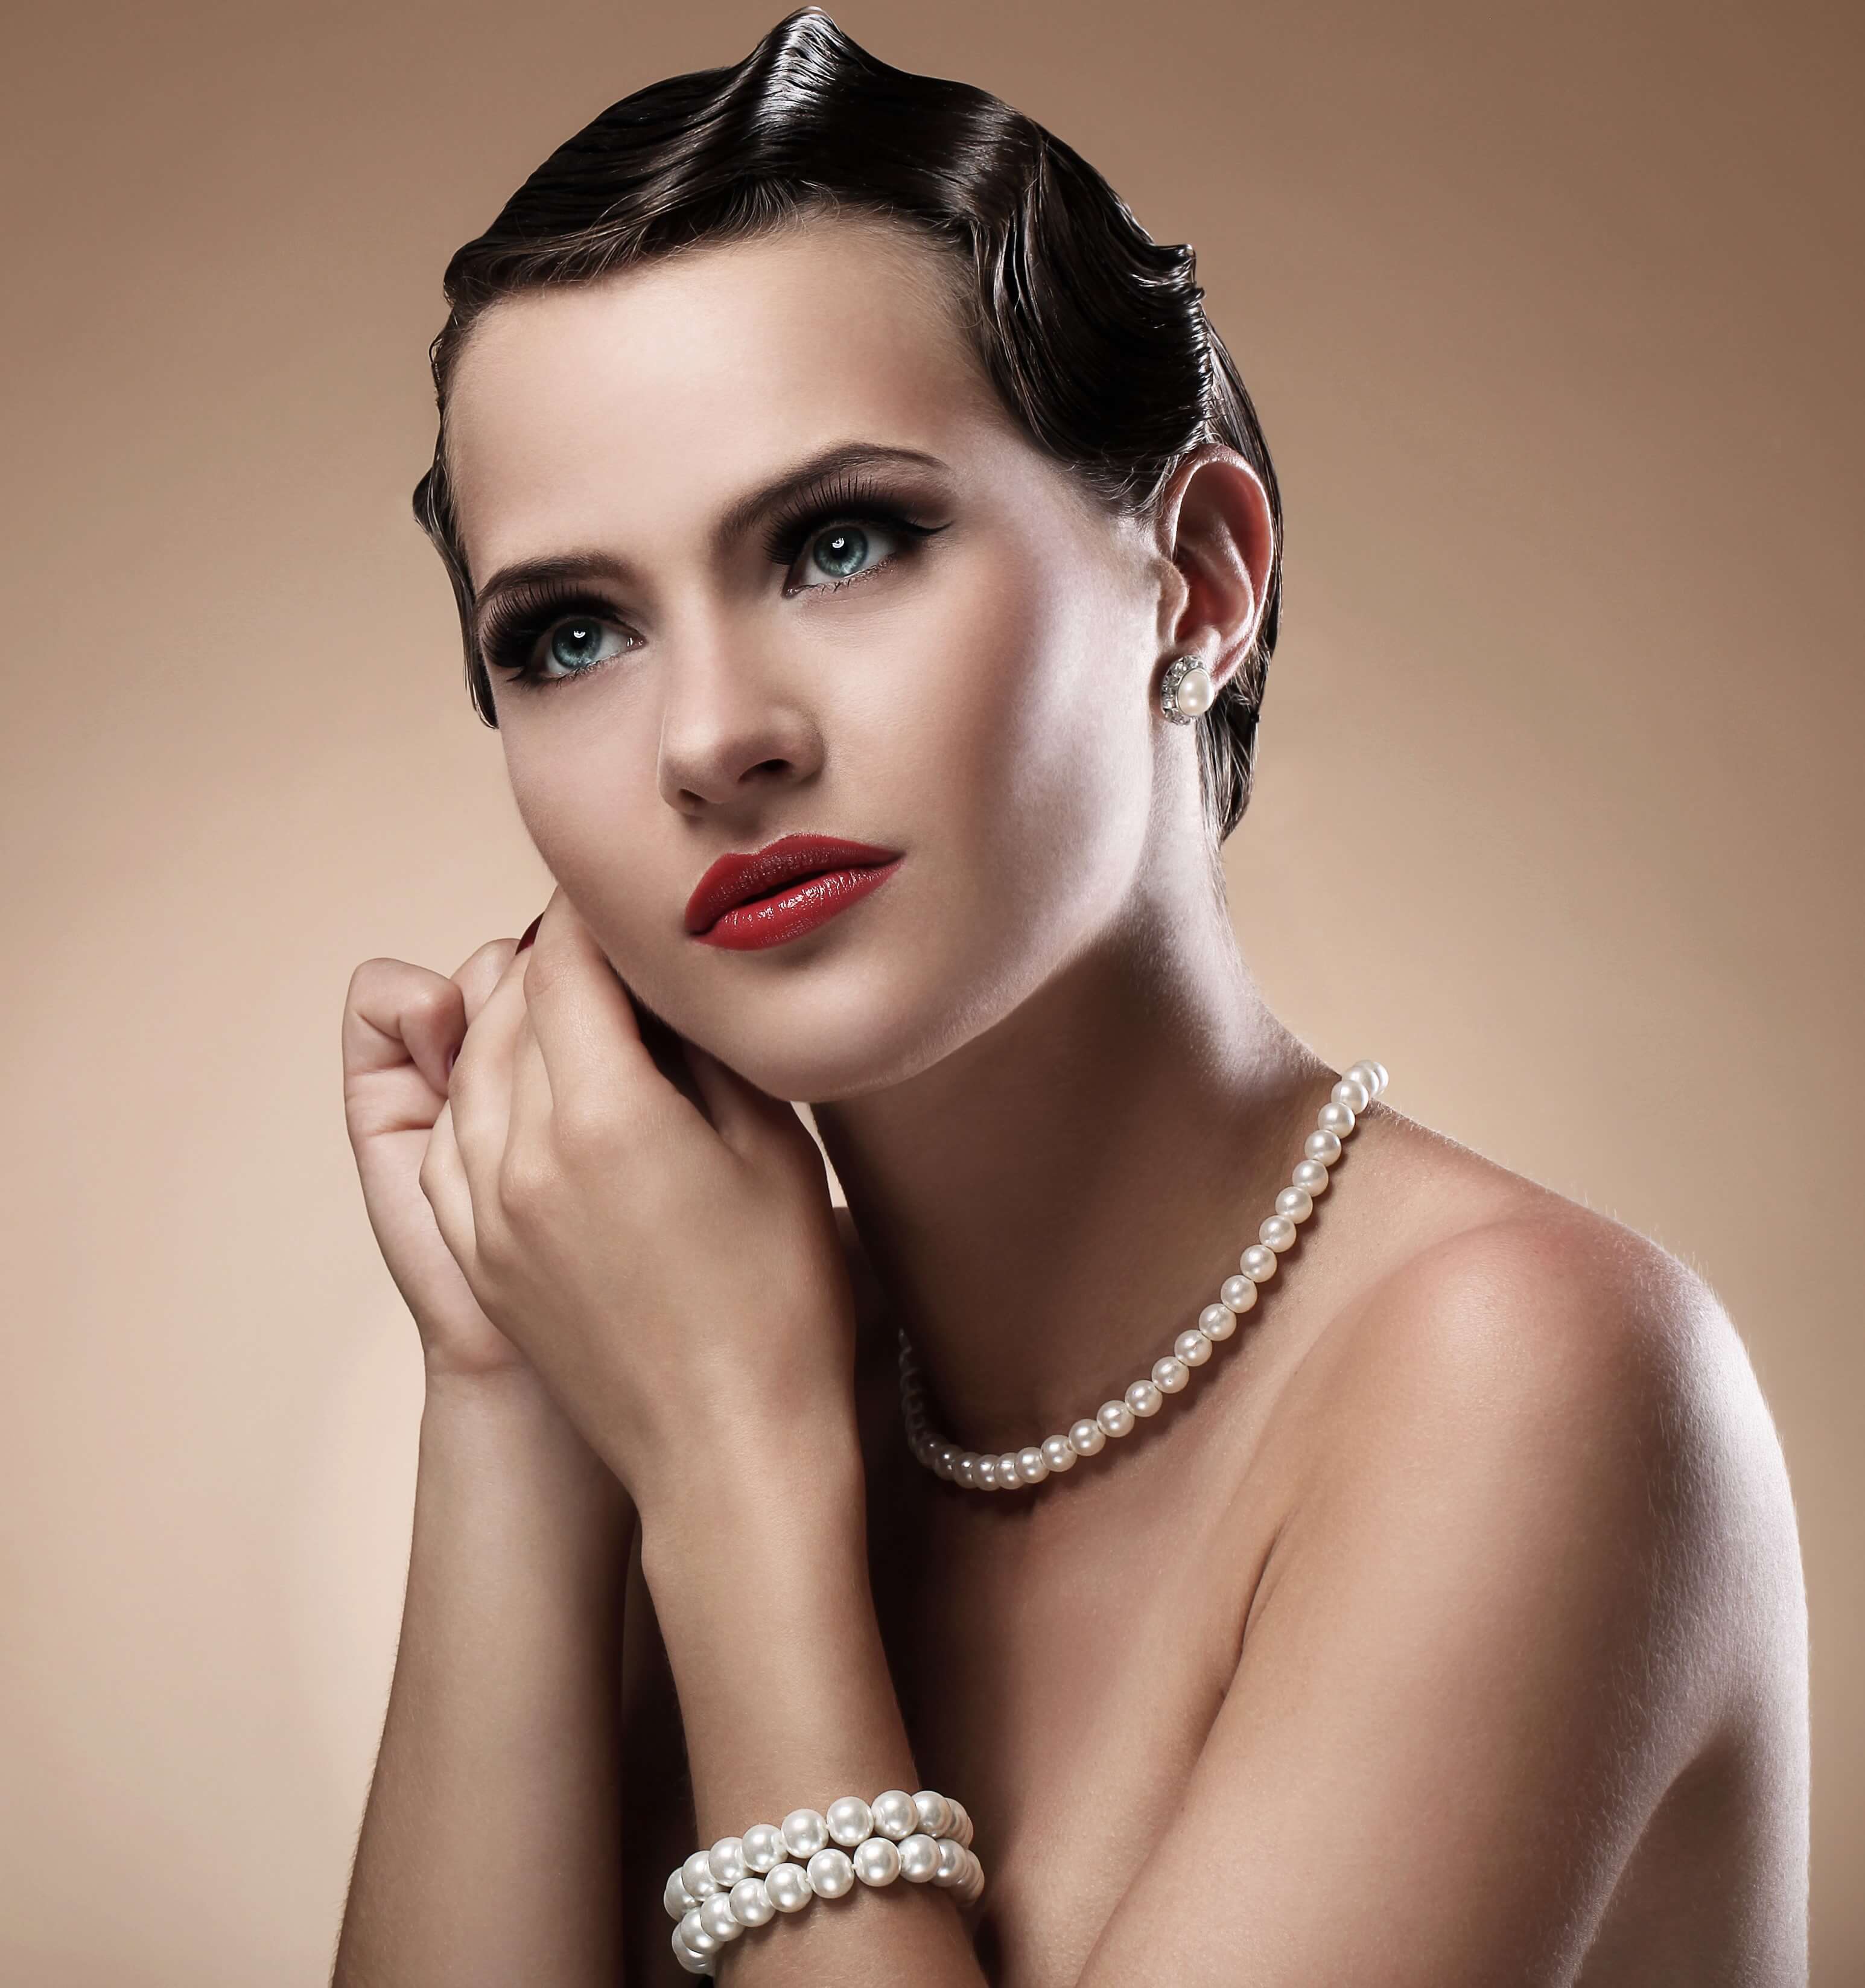 fresh water pearls jewelry